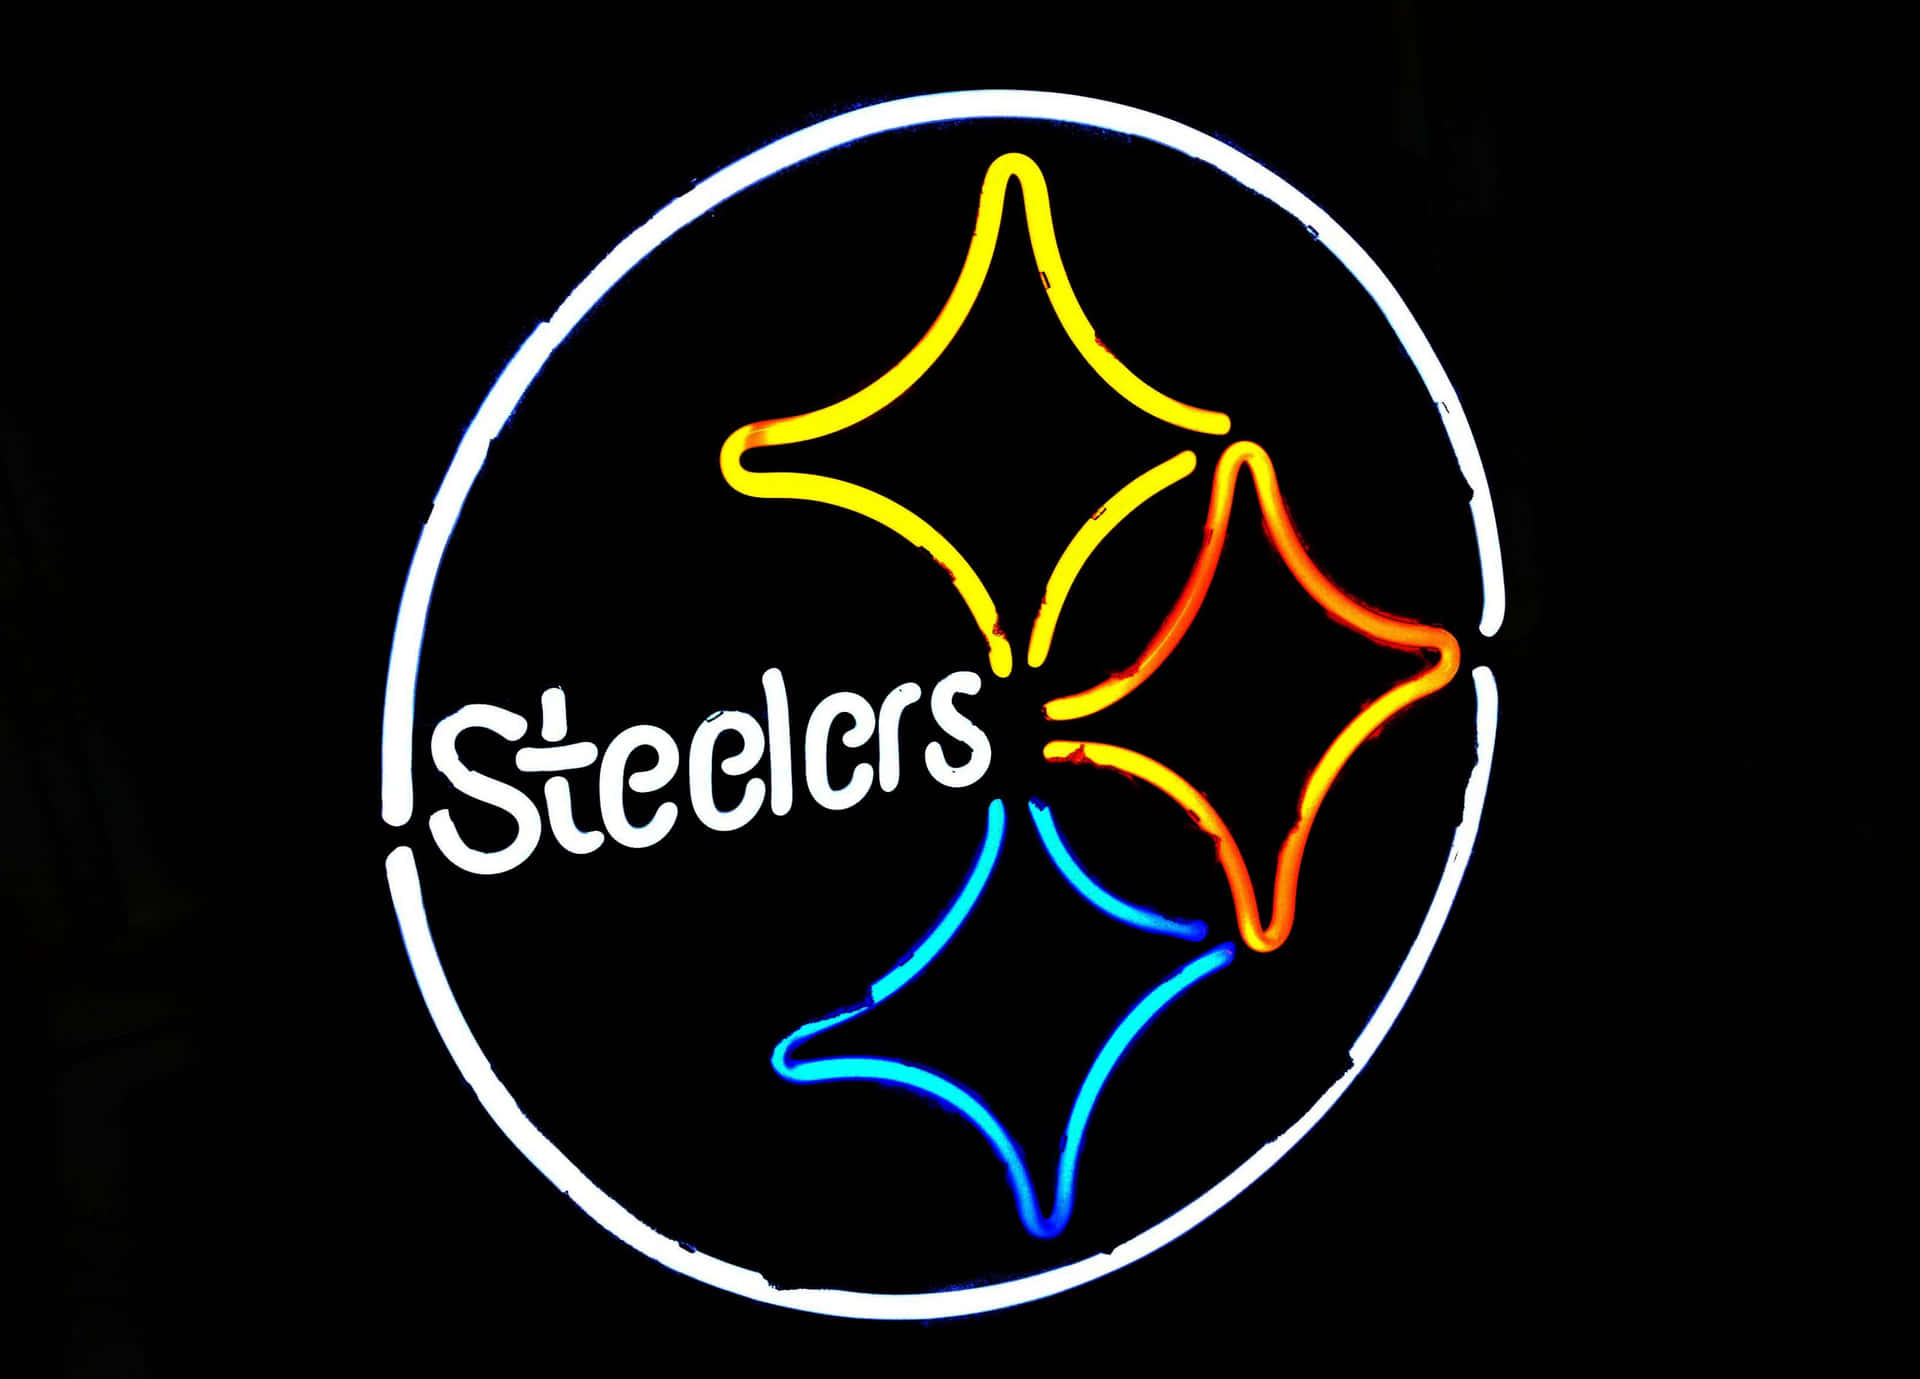 Logoder Pittsburgh Steelers Wallpaper